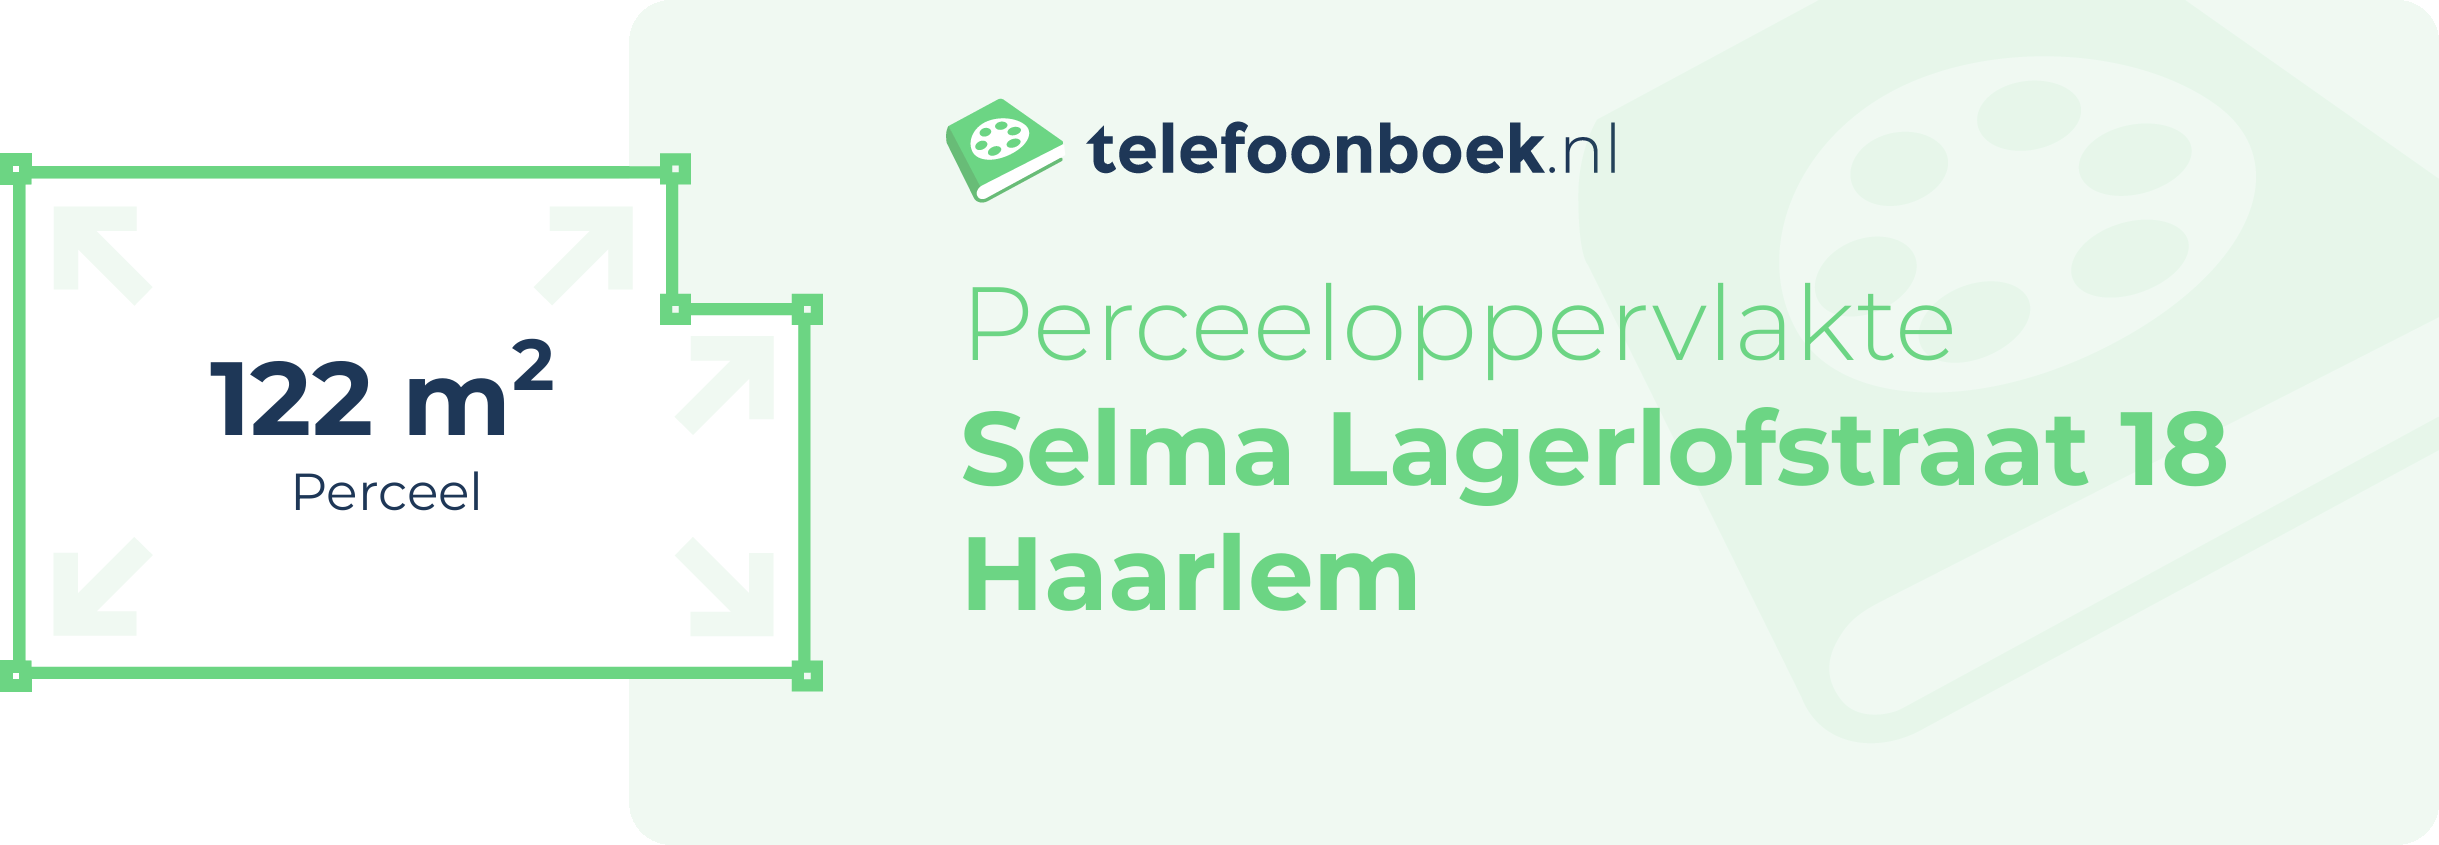 Perceeloppervlakte Selma Lagerlofstraat 18 Haarlem